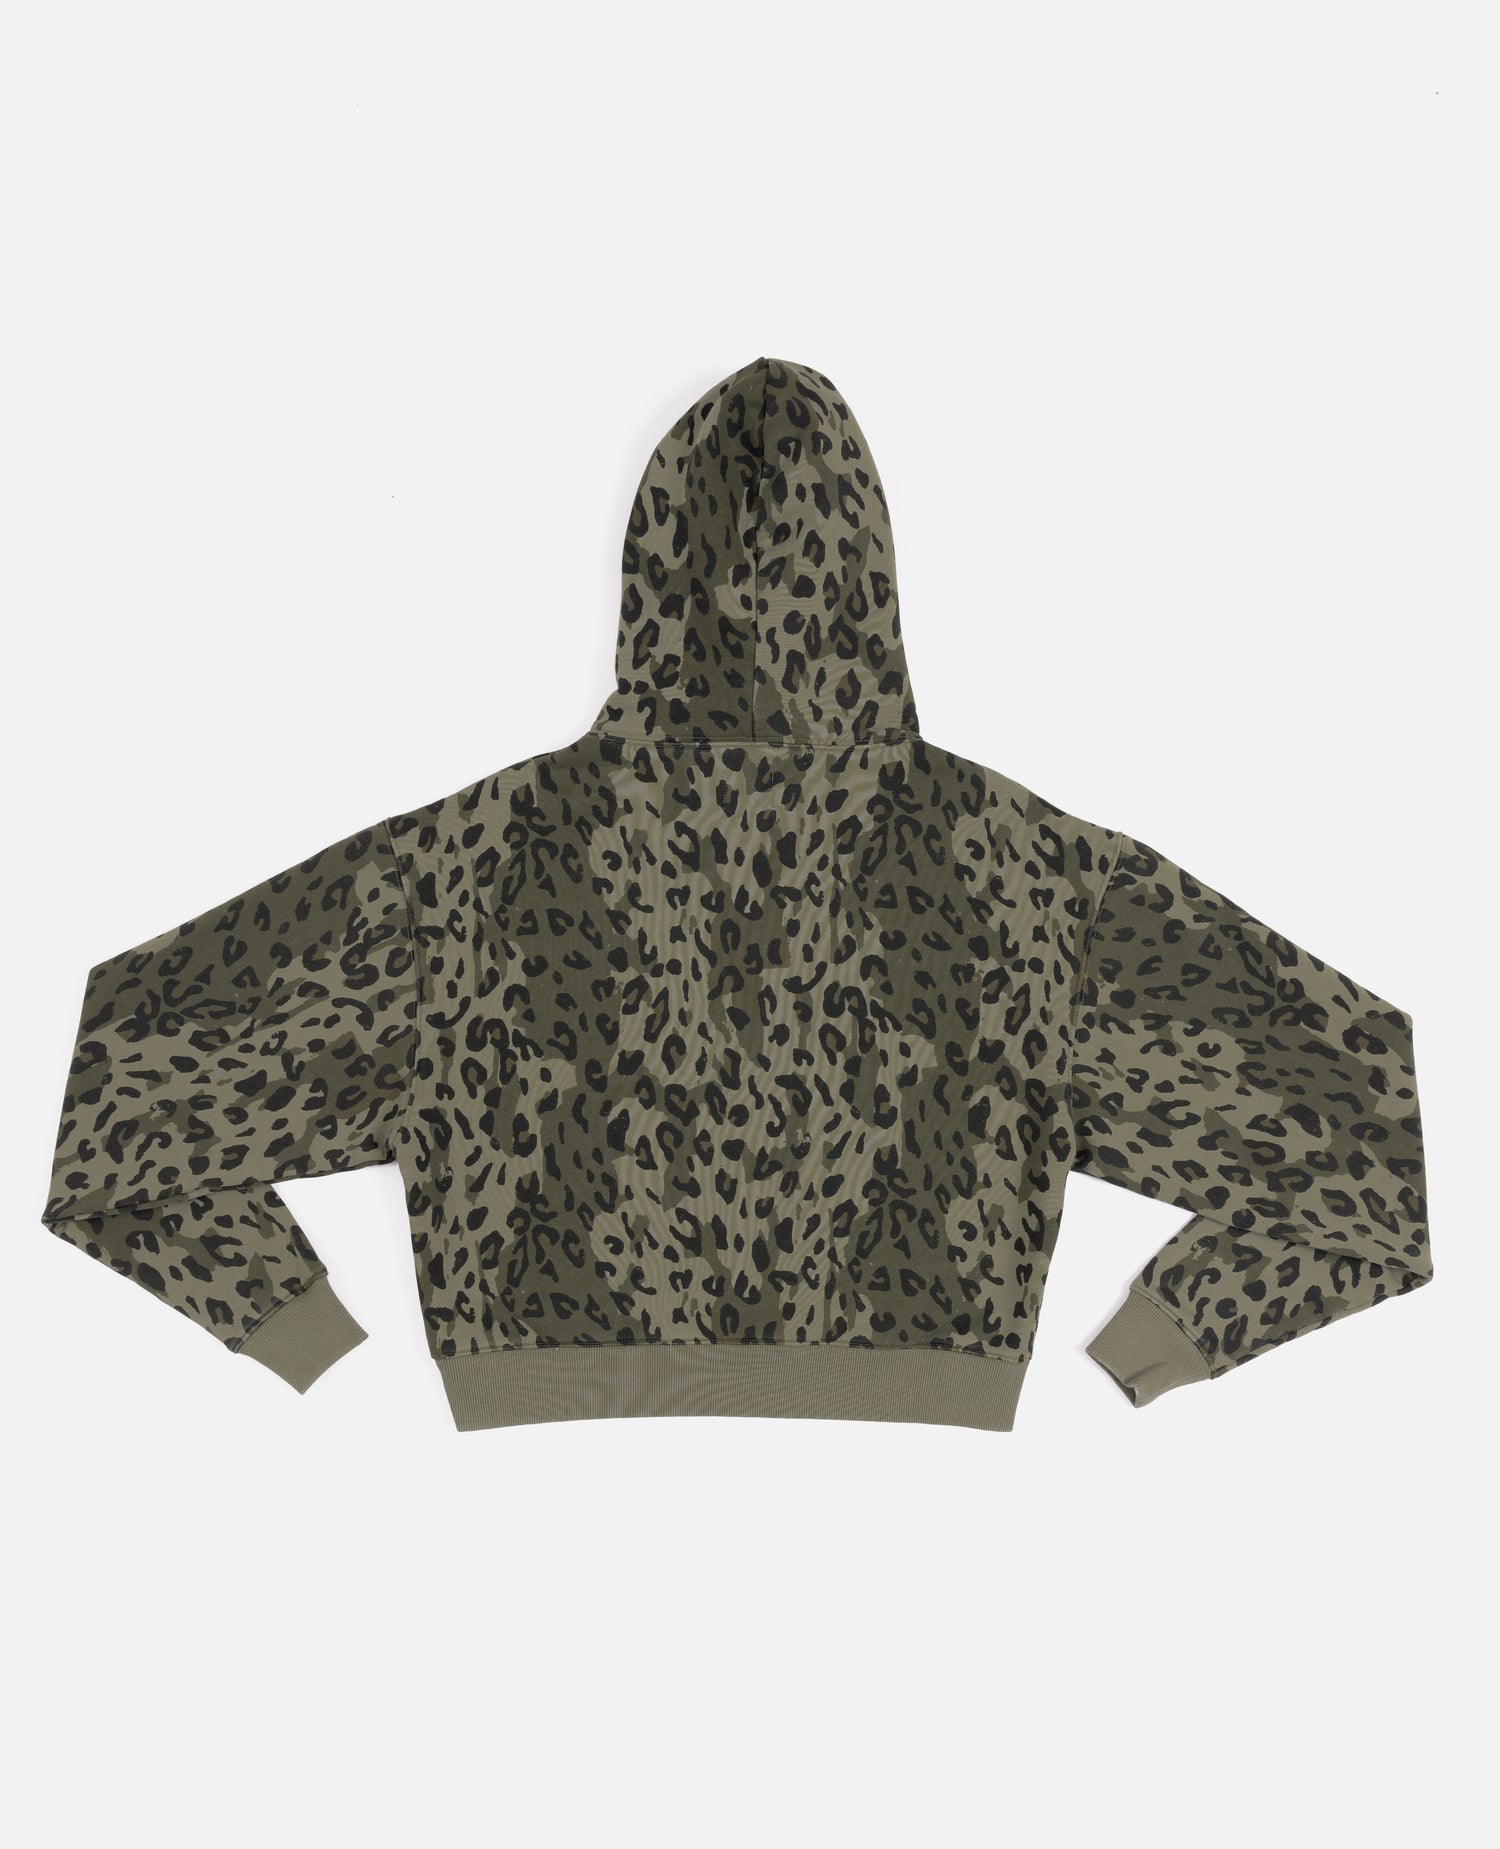 Patta Femme Leopard Cropped Hooded Sweater (Dusty Olive)